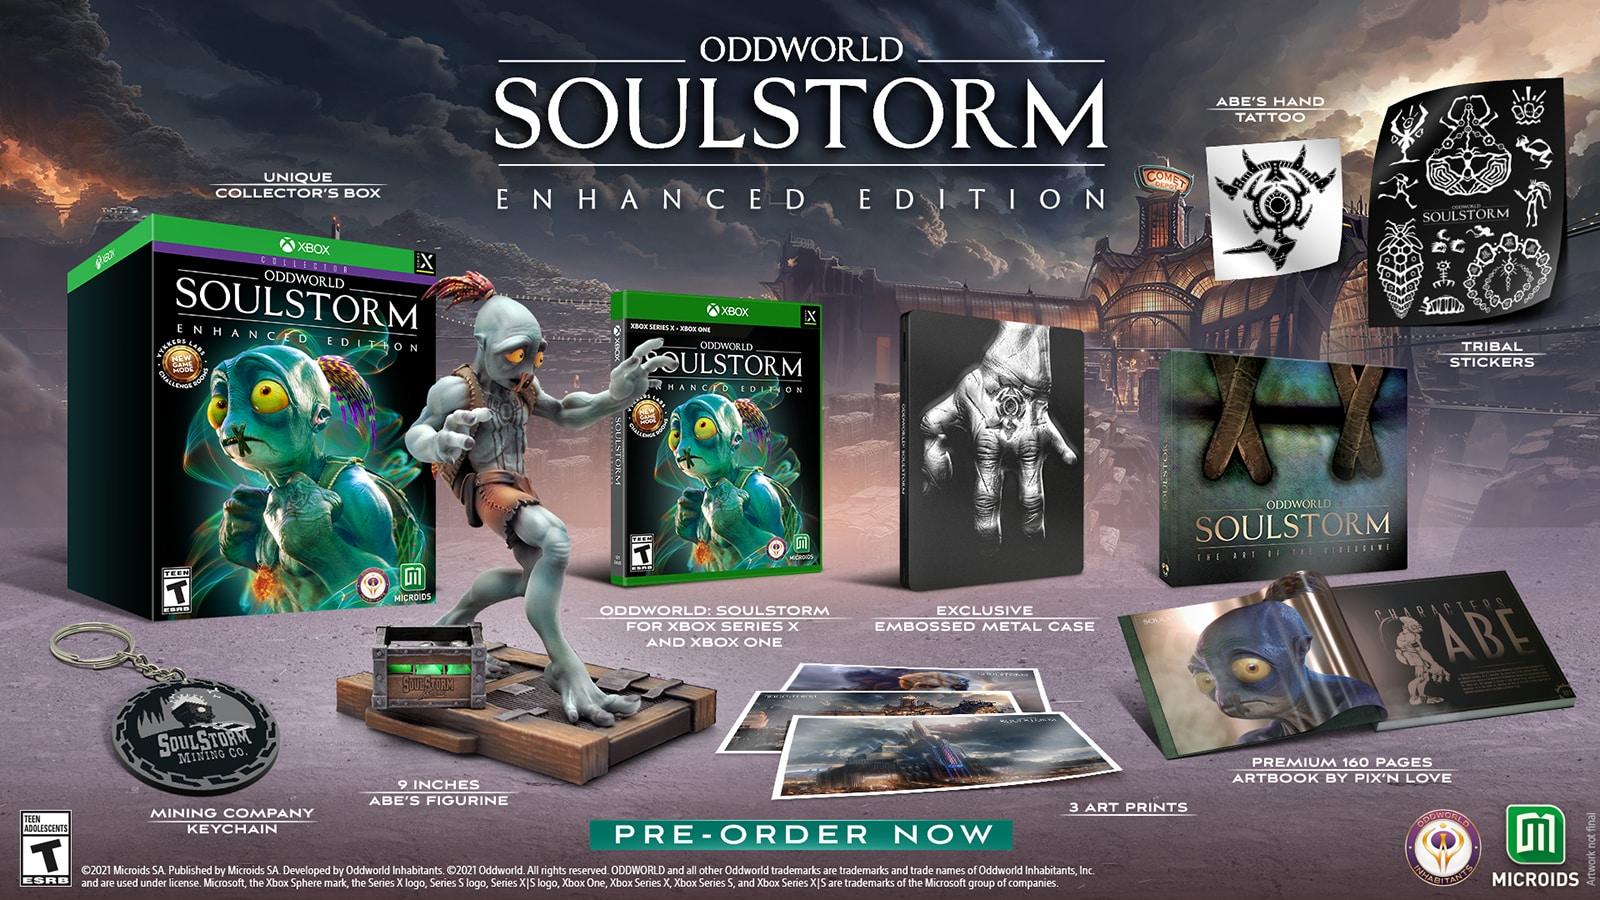 The Collectors Edition bonuses for Oddworld Soulstorm Enhanced Edition